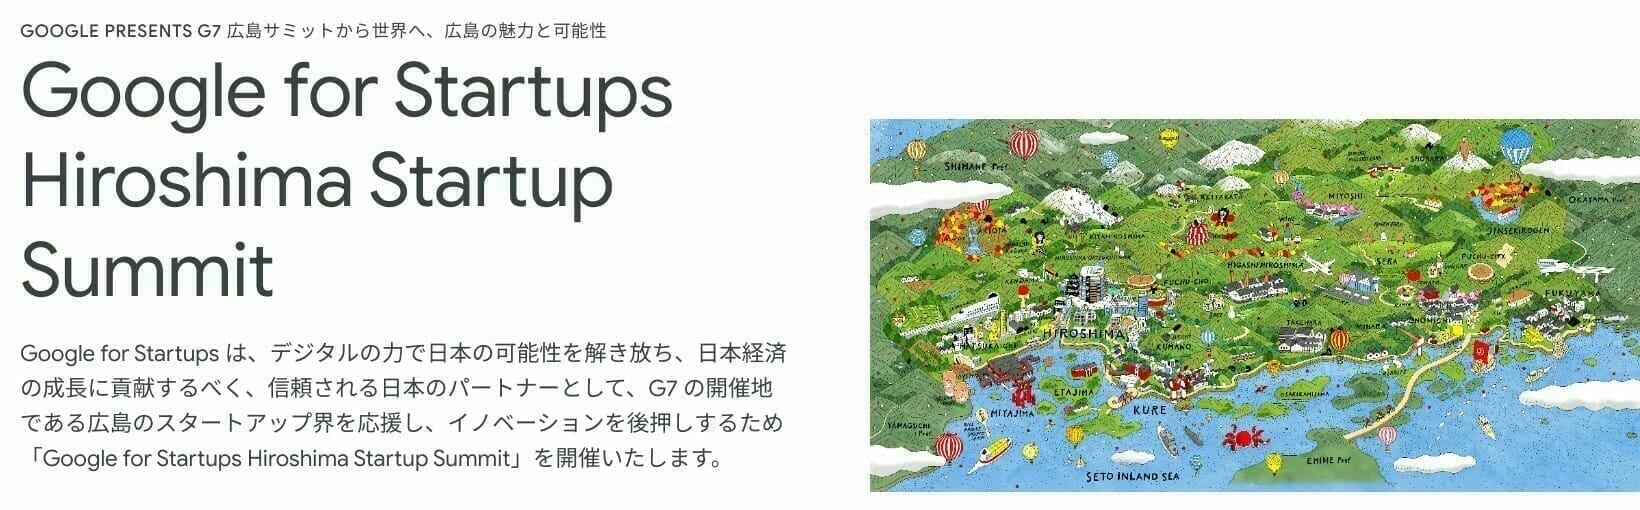 [Google for Startups] Google for Startups Hiroshima Startup Summit